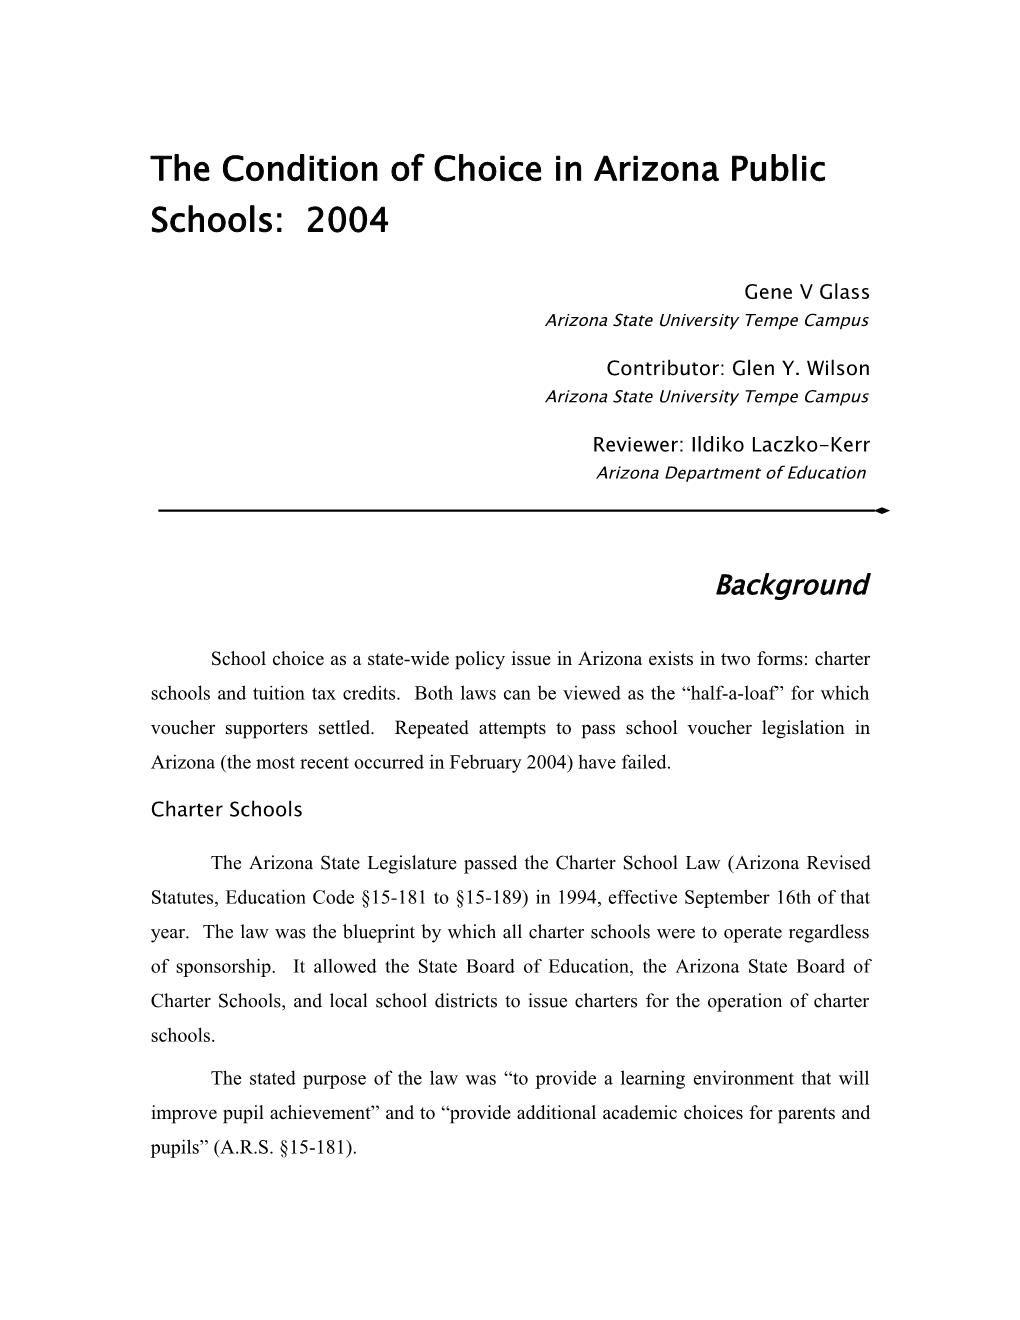 The Condition of Choice in Arizona Public Schools: 2004